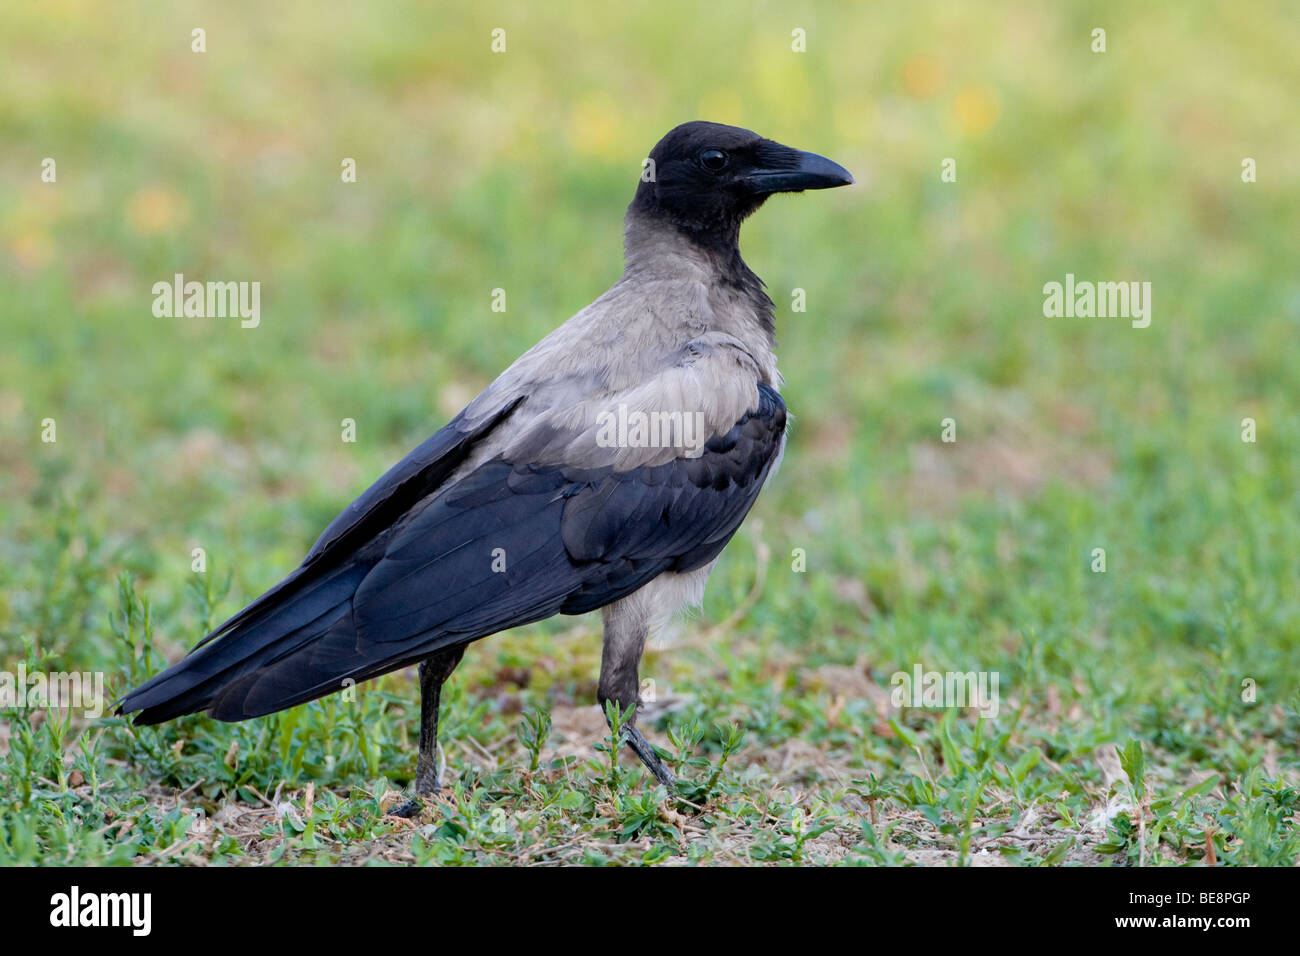 Bonte Kraai staand in het gras. Hooded Crow standing in a field of grass. Stock Photo